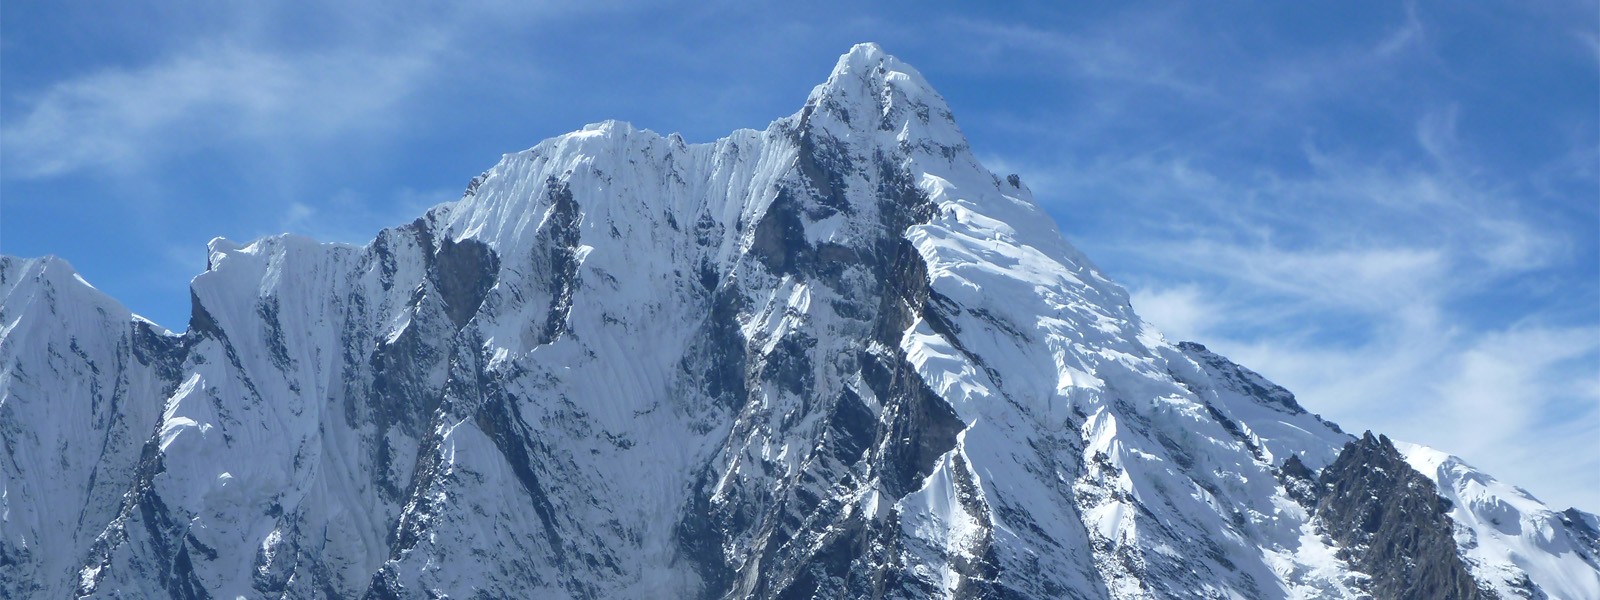 Ganesh Himal I Summit